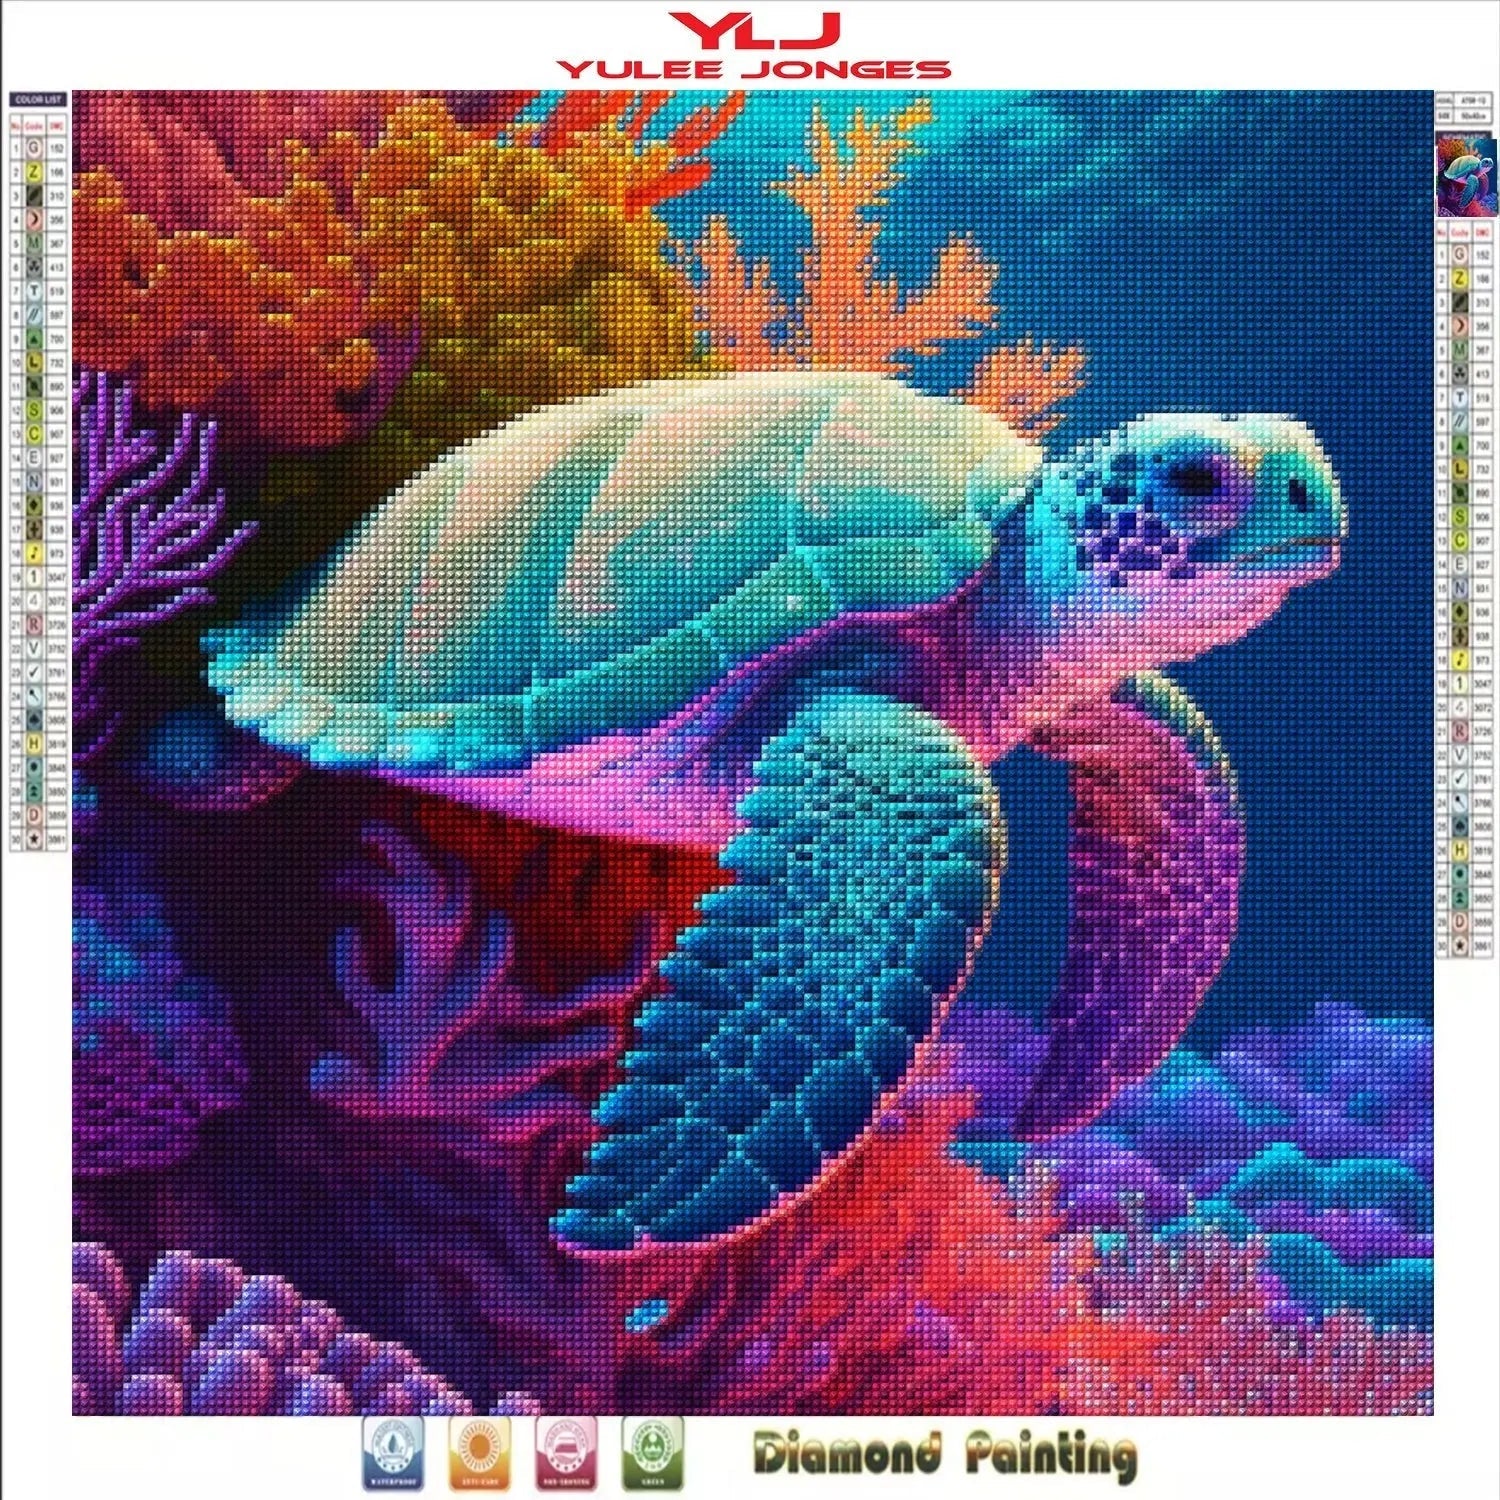 Castle Turtle Diamond Painting Kit with Free Shipping – 5D Diamond